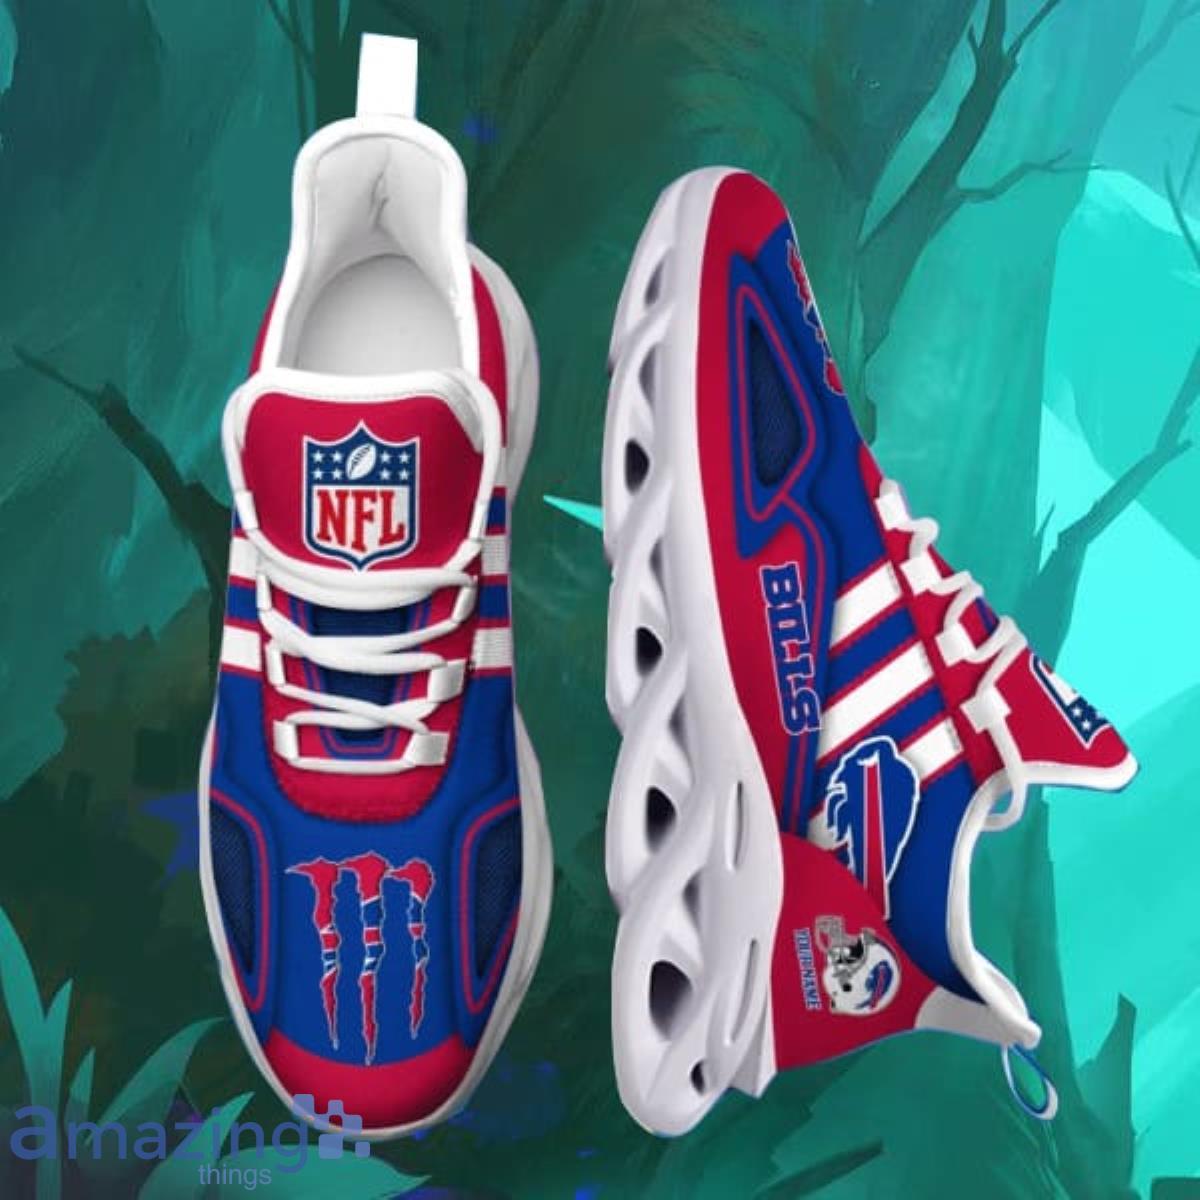 Buffalo Bills NFL Max Soul Shoes For Fans